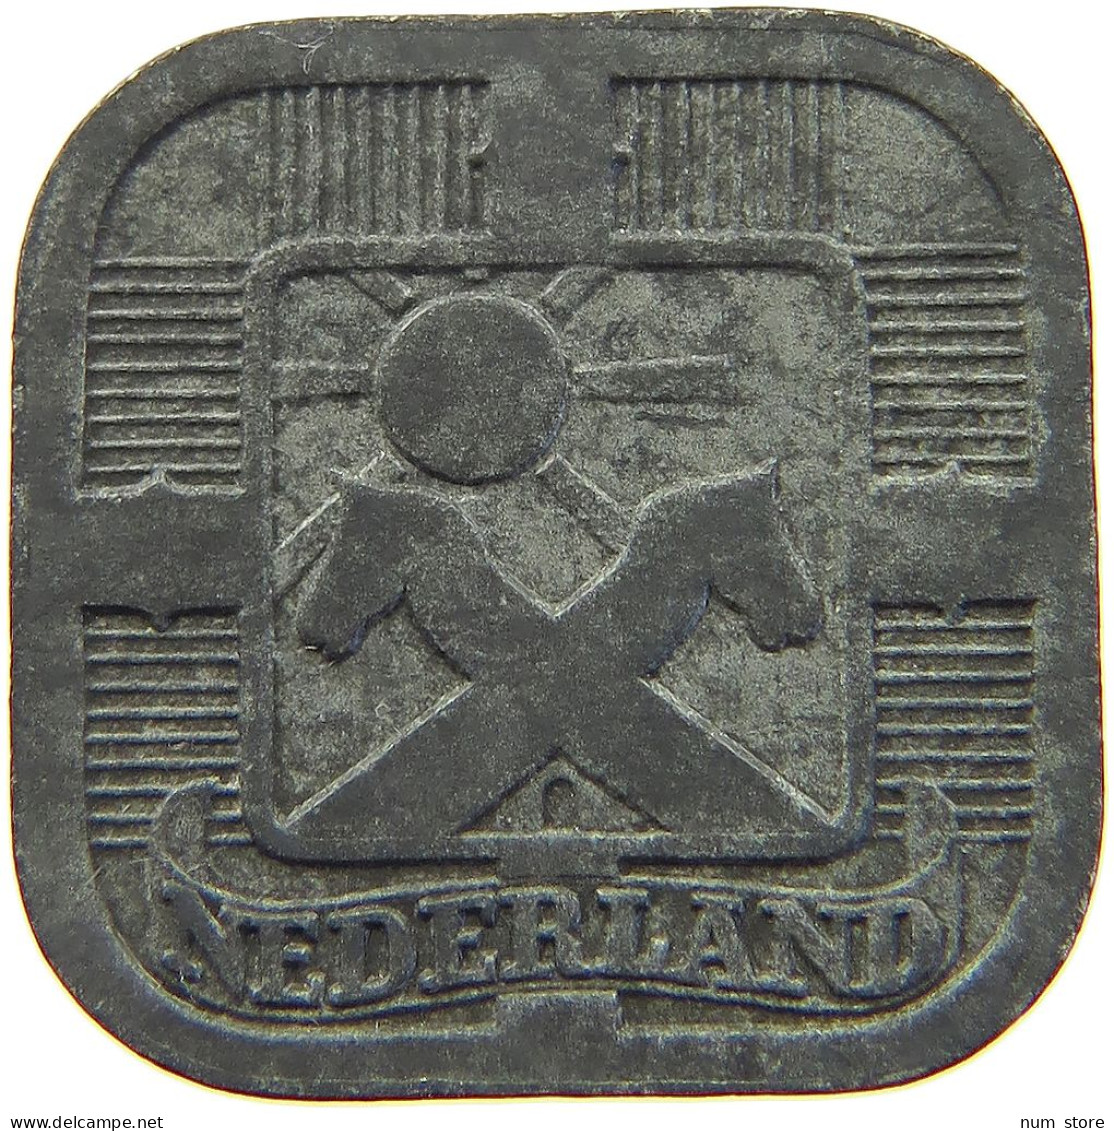 NETHERLANDS 5 CENTS 1941 #a006 0695 - 5 Cent